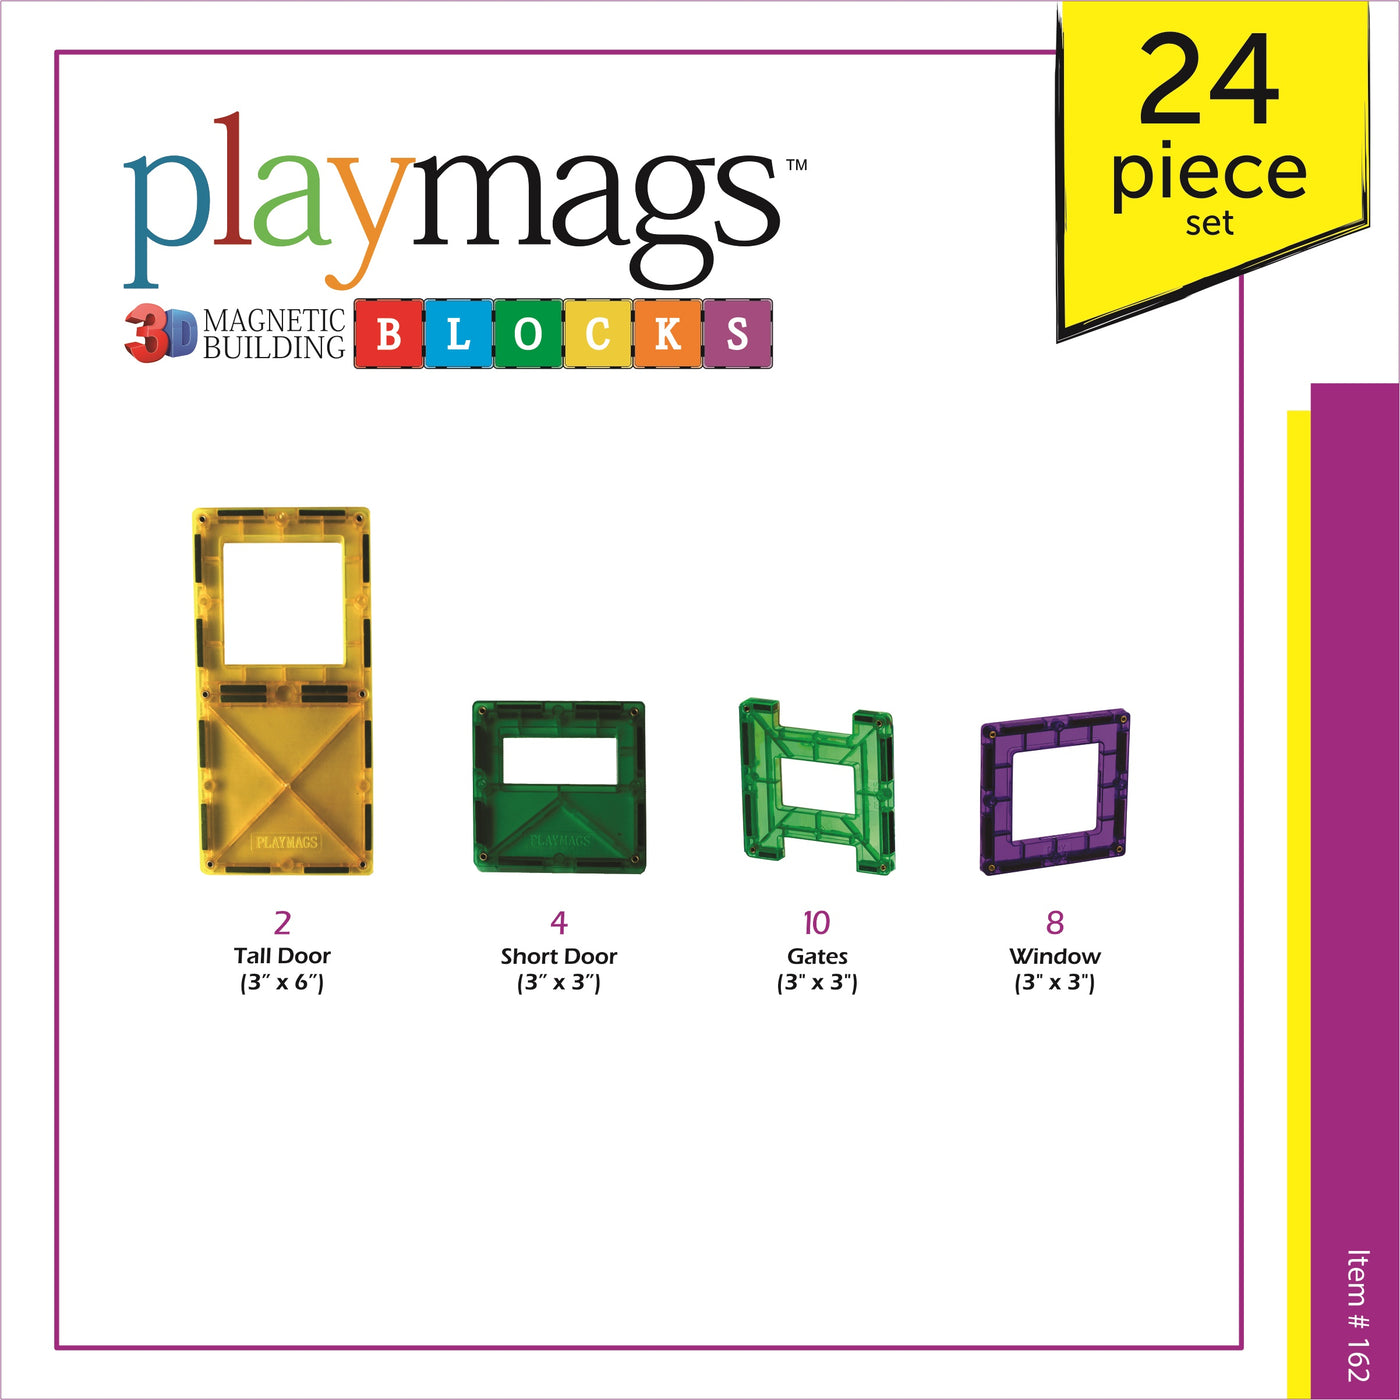 Playmags segulkubbar - 24 stk accessory set